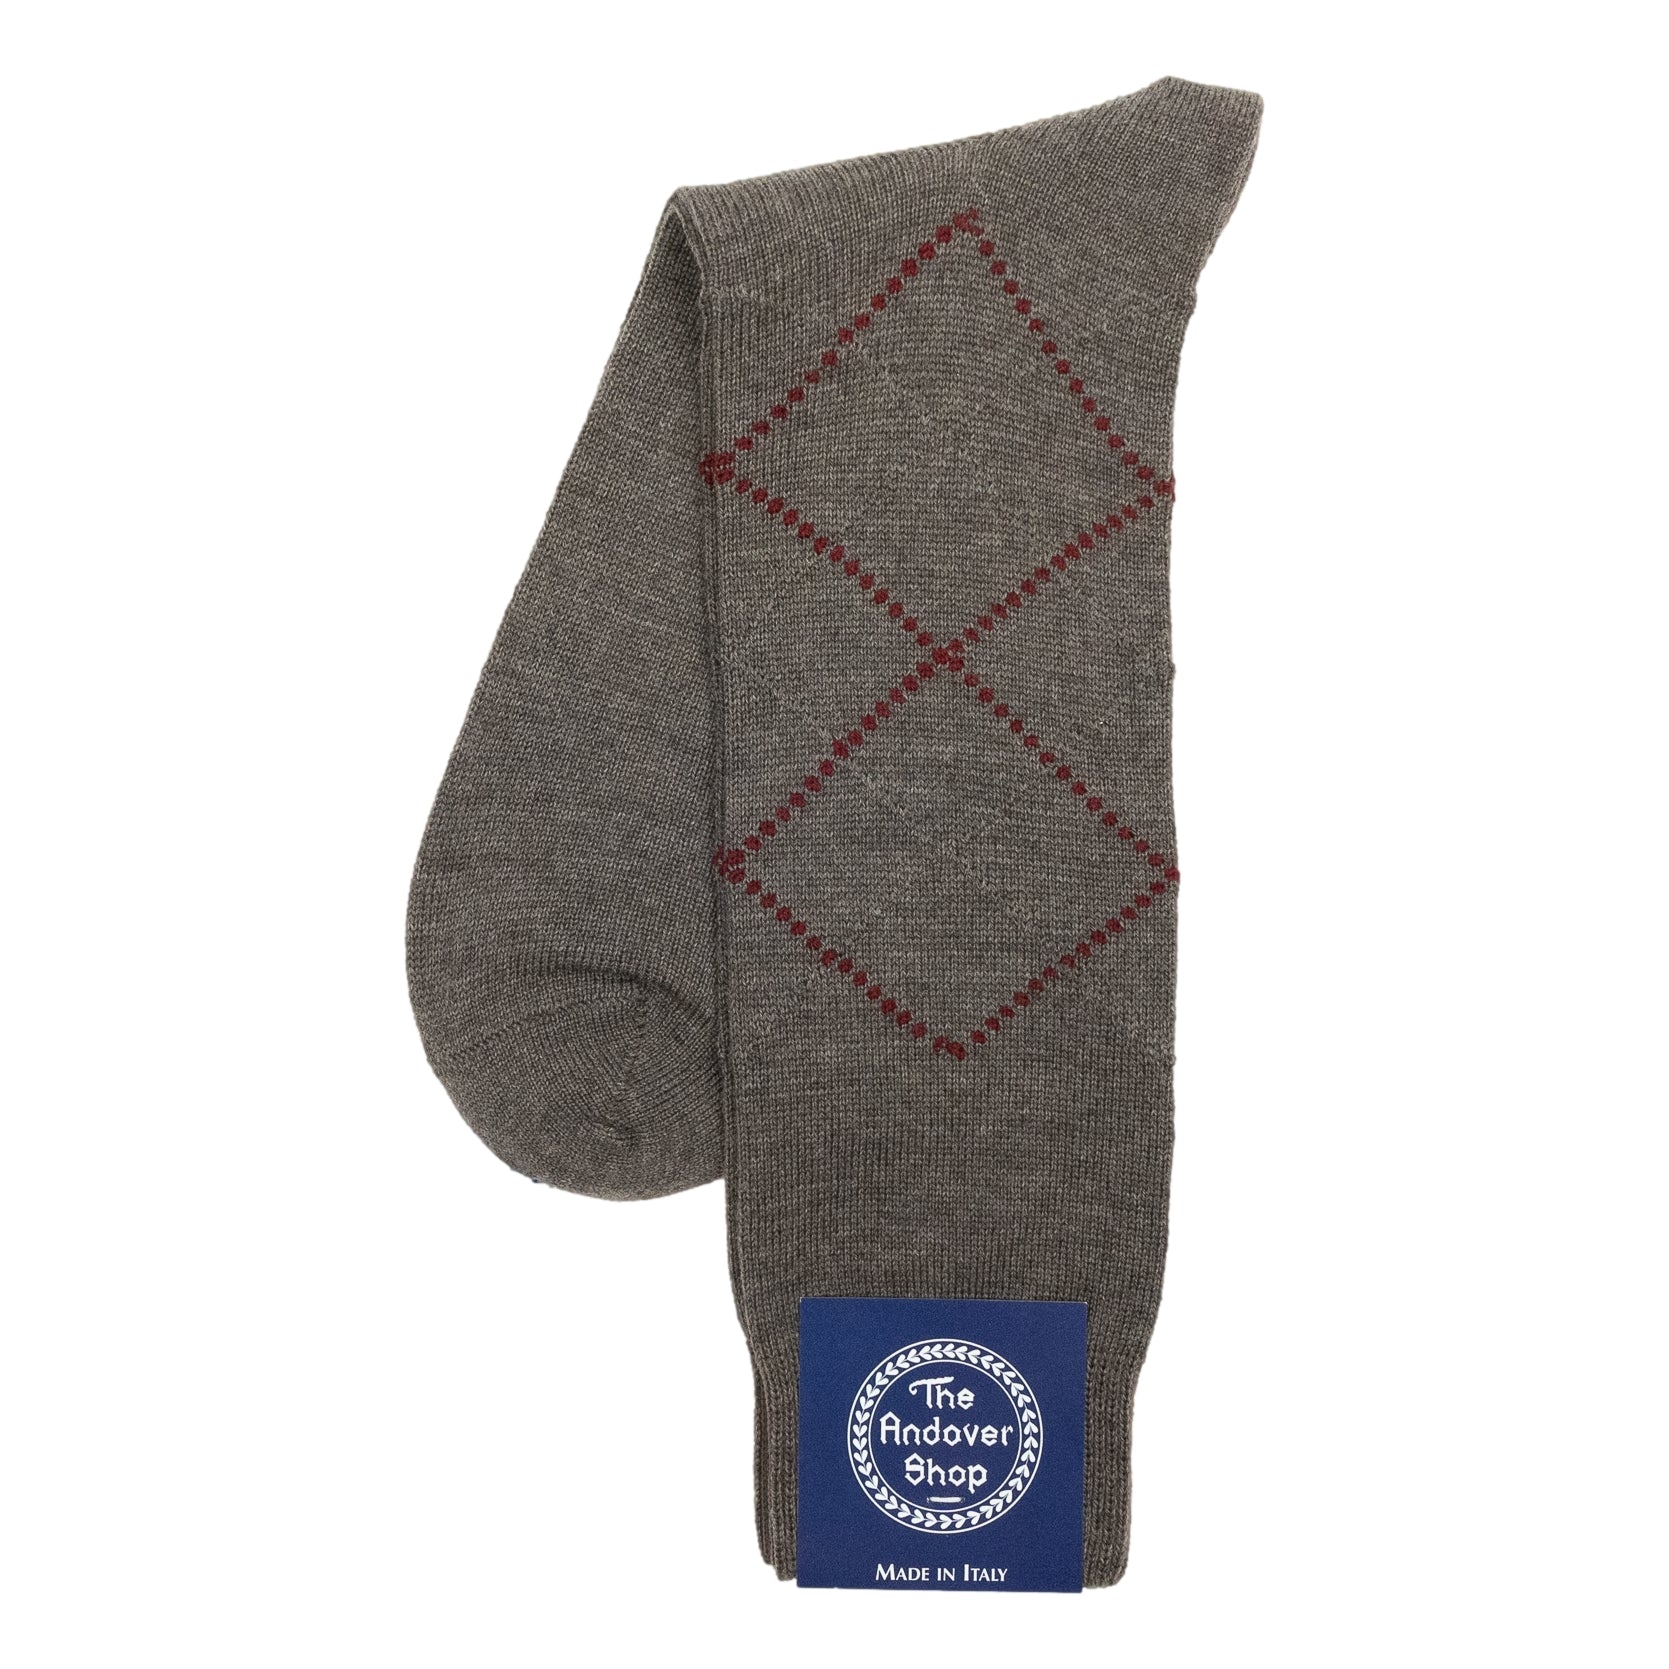 Mid-calf Argyle Wool Dress Socks